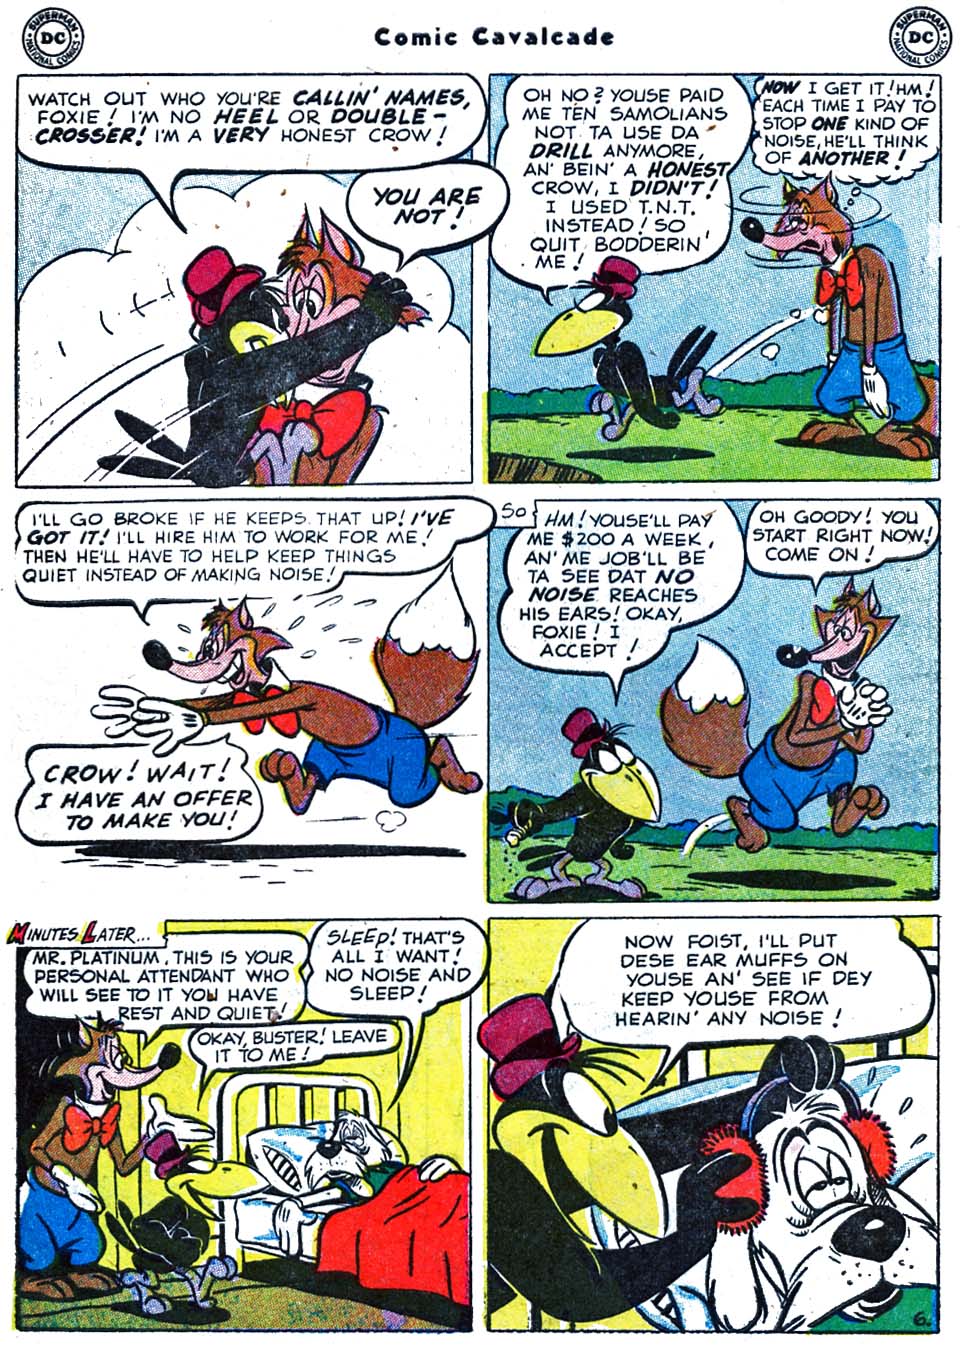 Comic Cavalcade issue 47 - Page 8